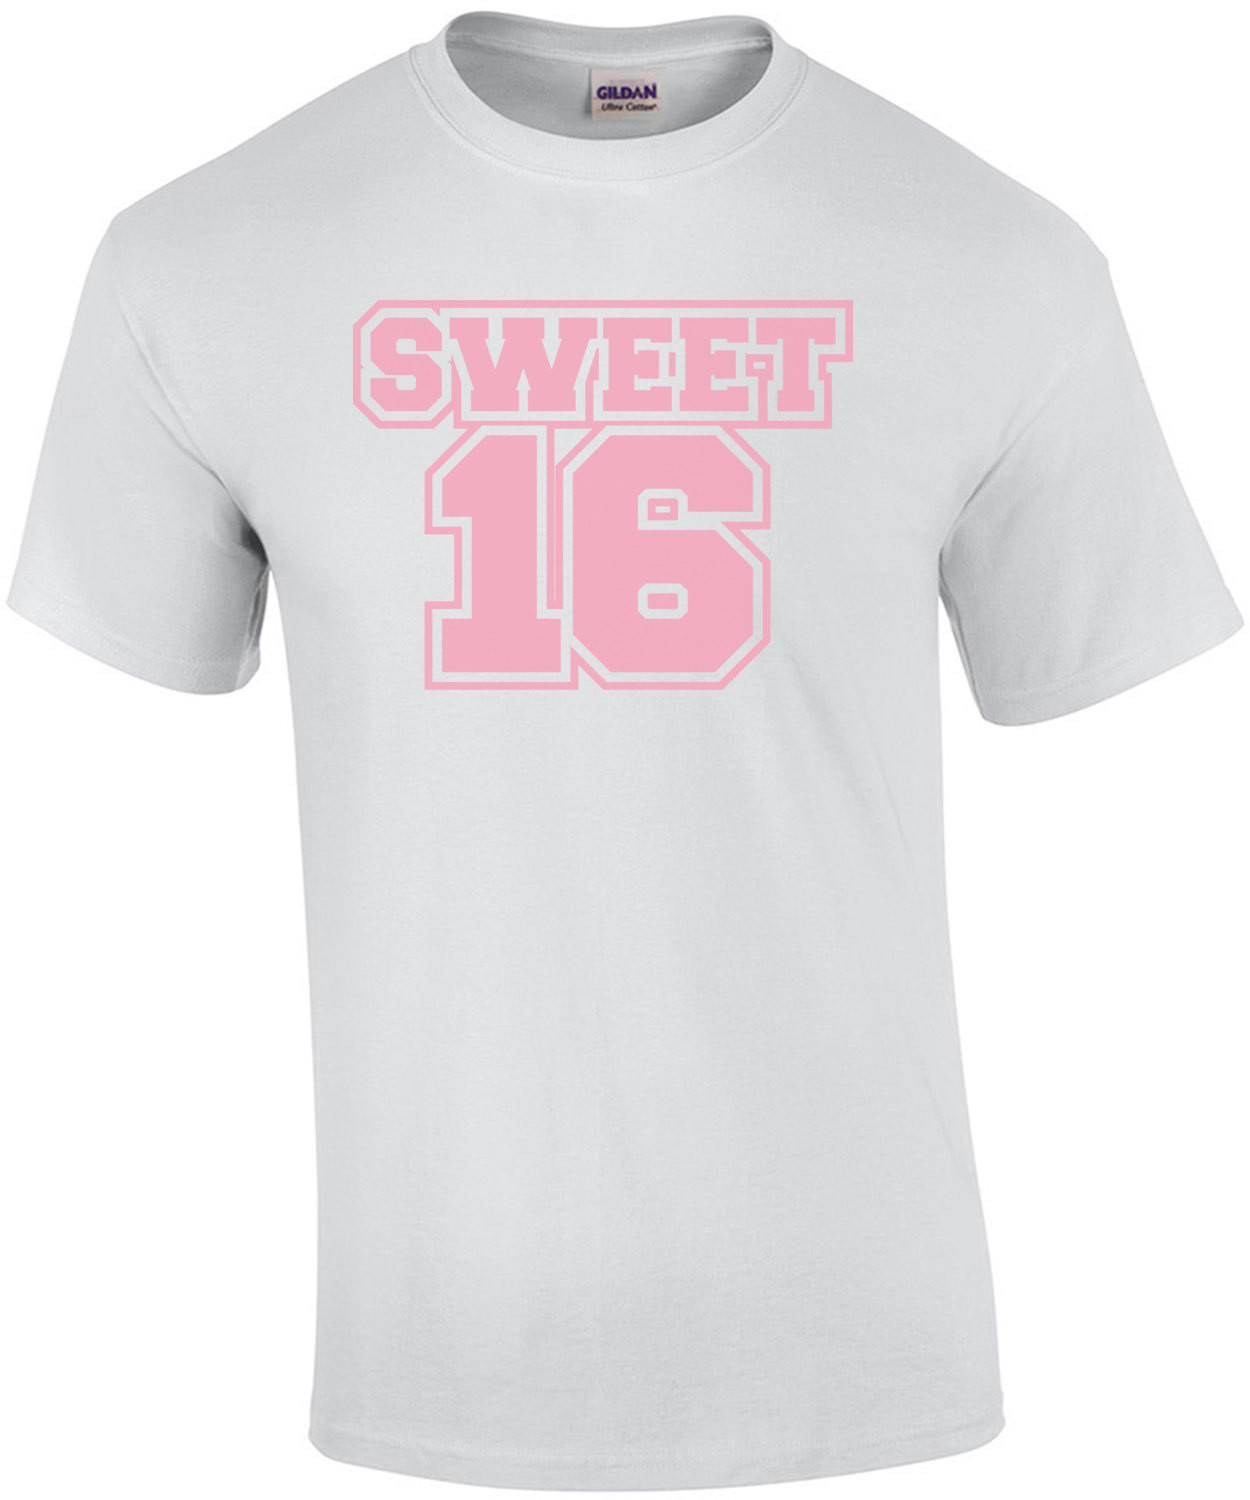 Sweet 16 - 16th birthday t-shirt